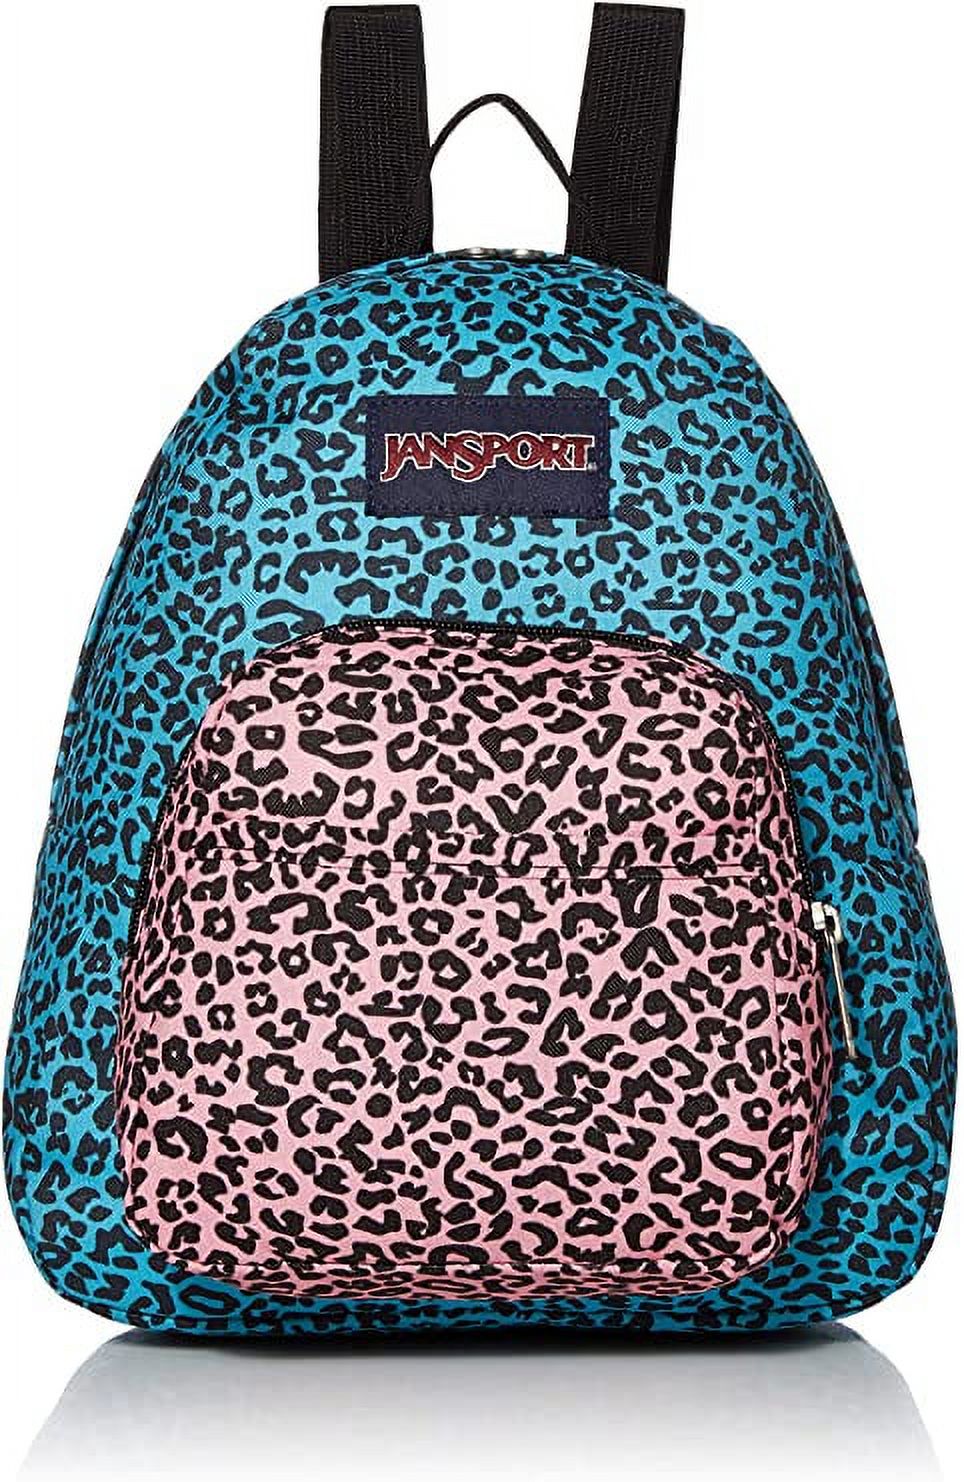 JanSport Half Pint Mini Backpack - Peacock Blue Leopard Life - image 1 of 6